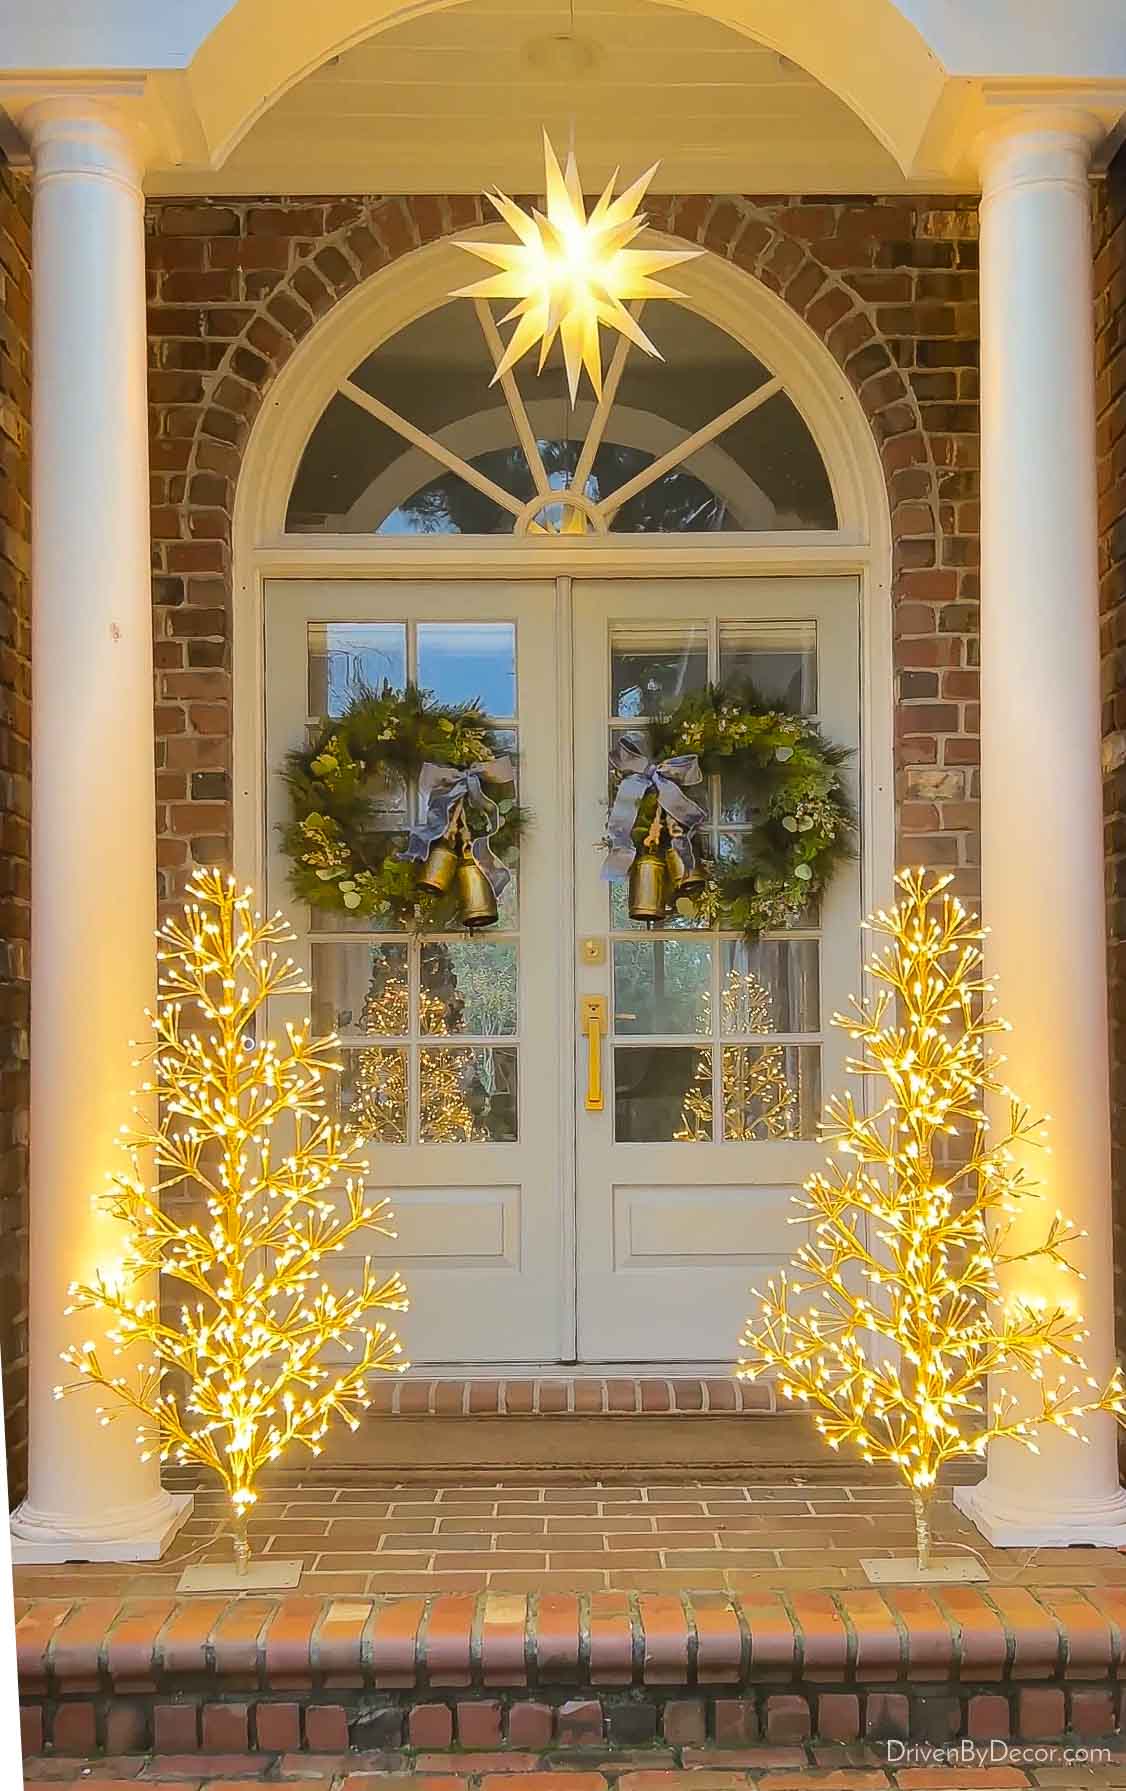 10 Simple Christmas Decoration Ideas! - Driven by Decor